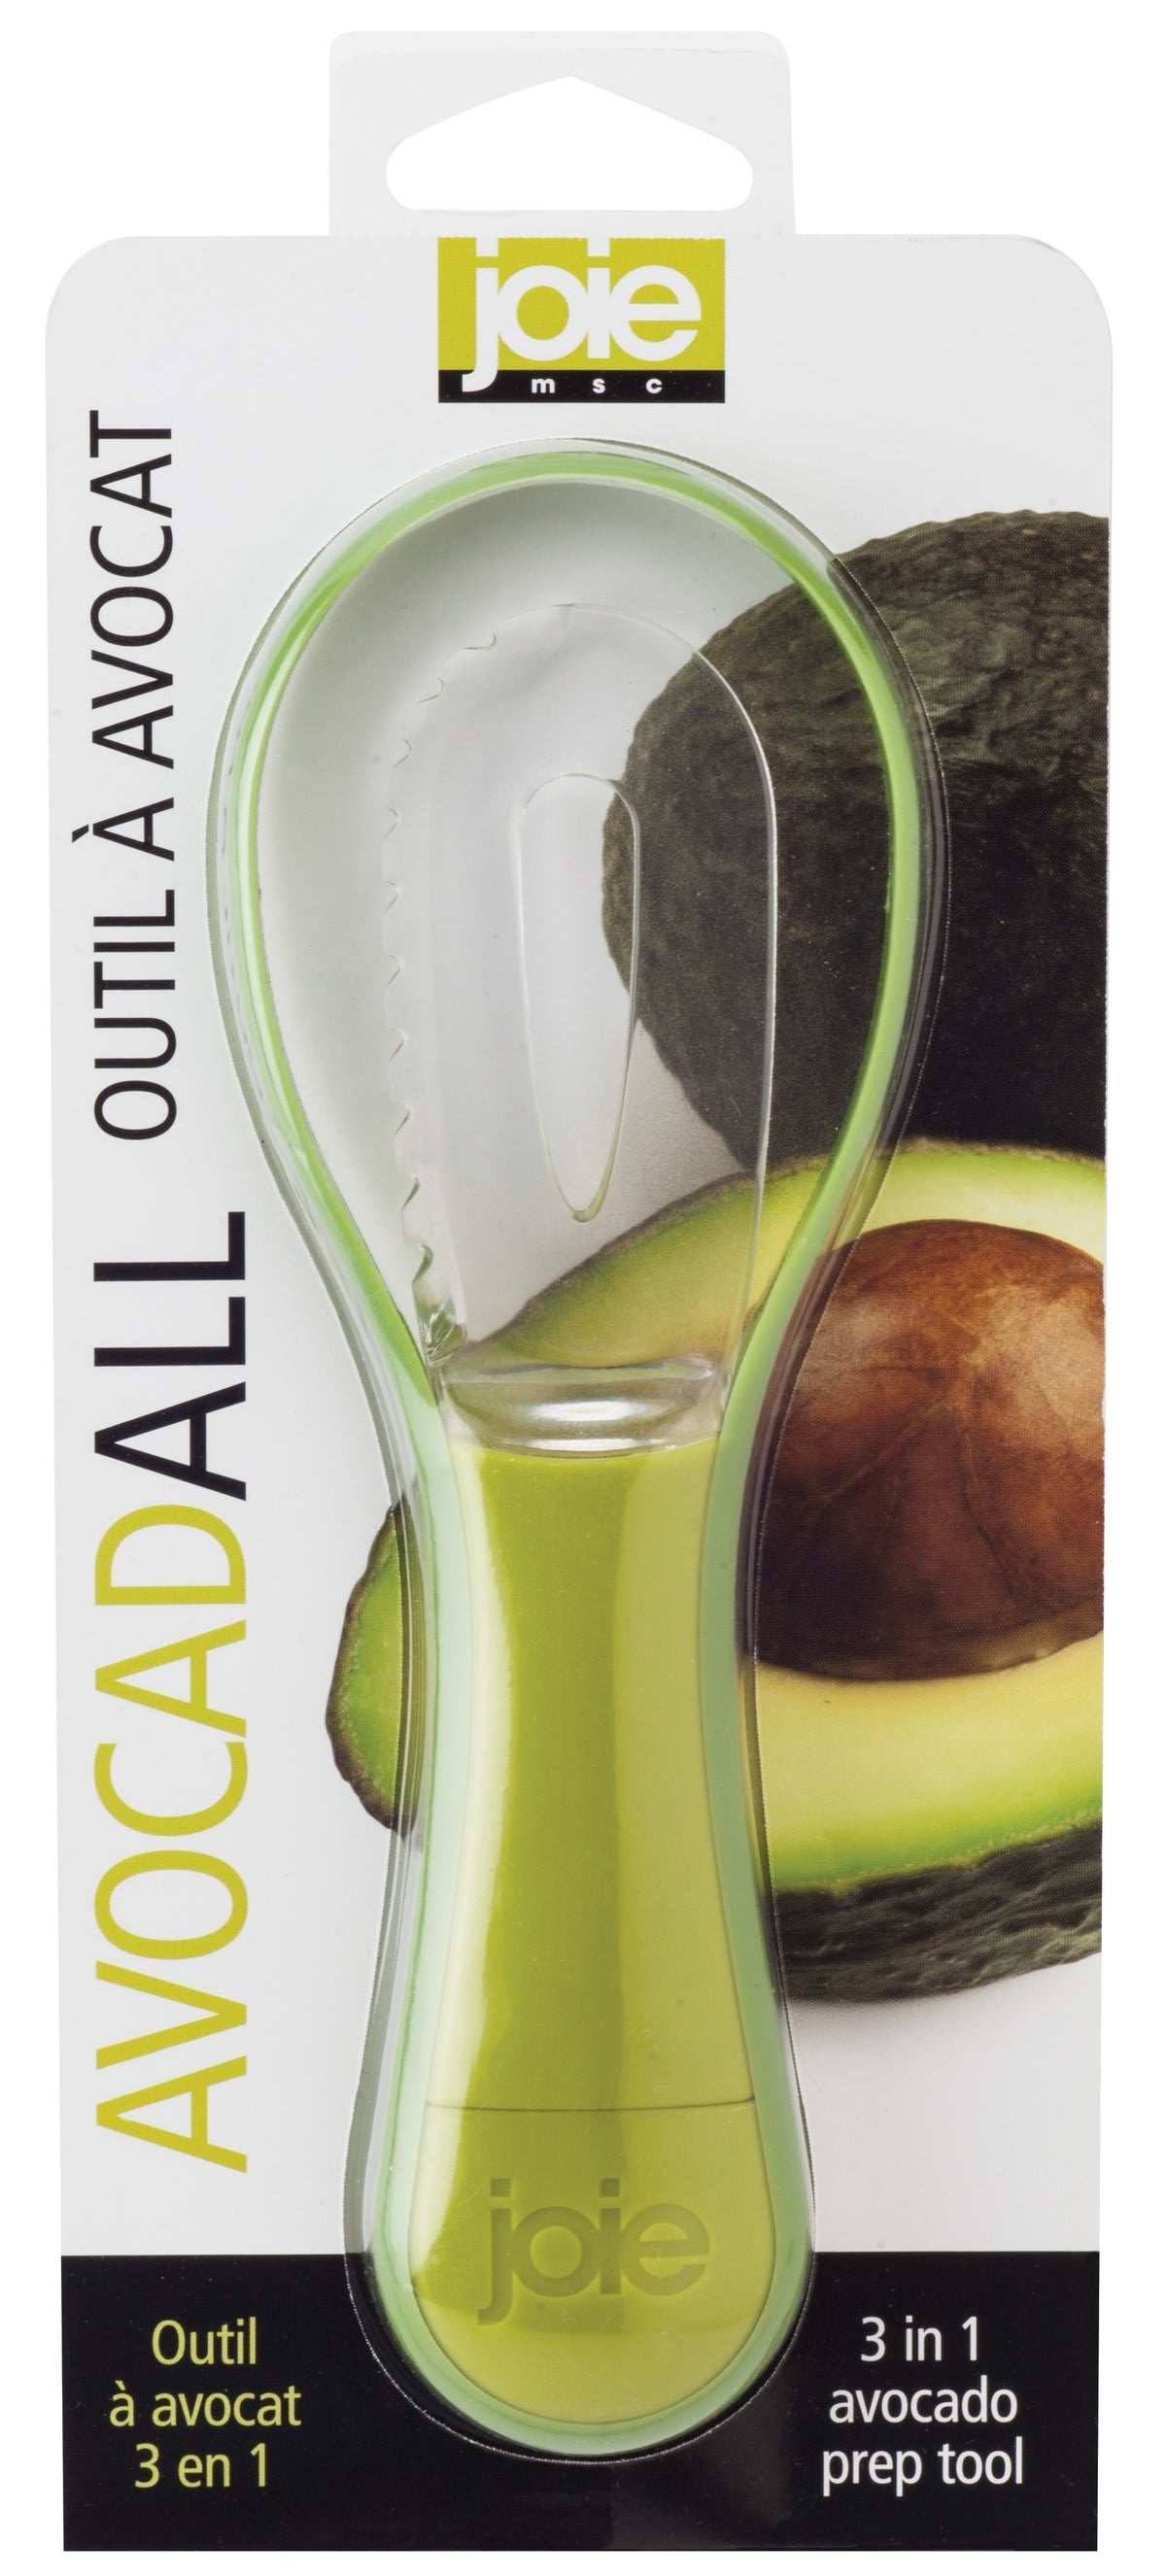 Joie MSC 32222 AvocadAll 3-in-1 Avocado Prep Tool, Green